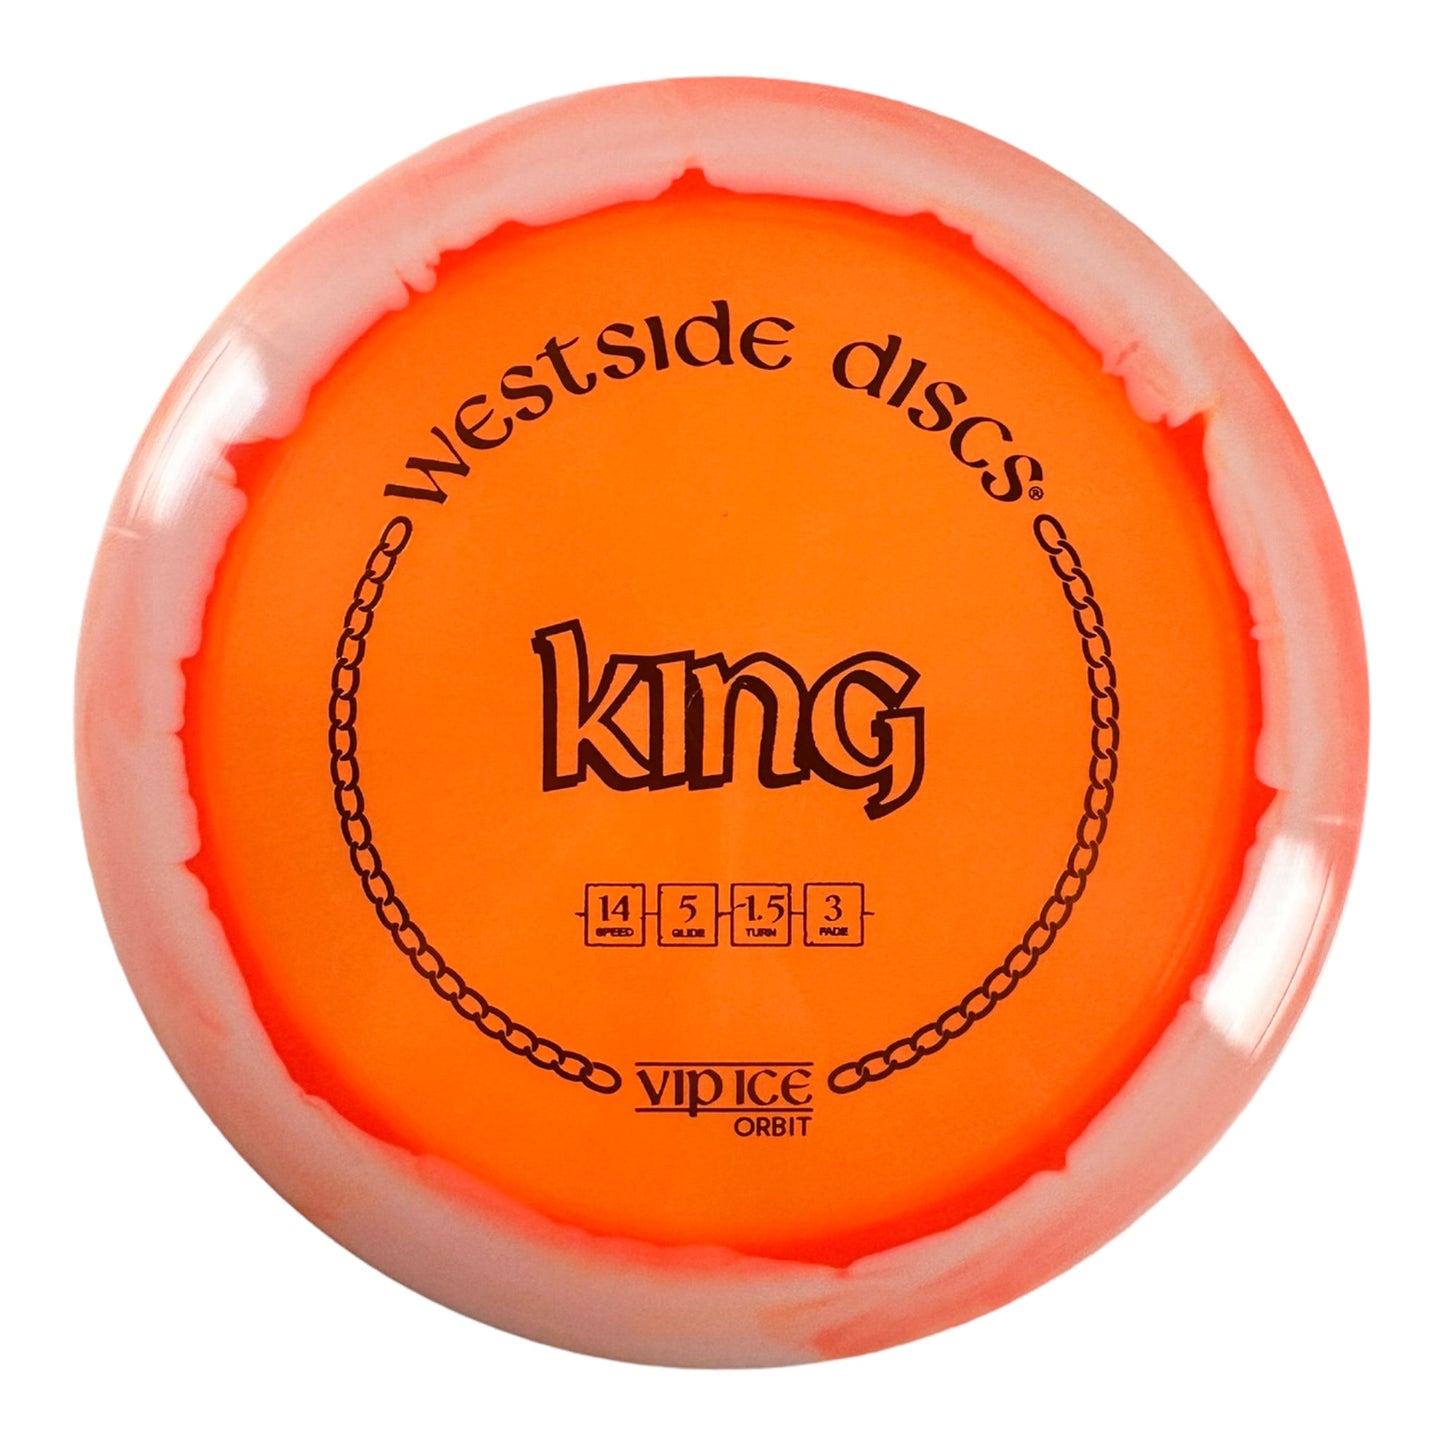 Westside Discs King | VIP Ice Orbit | Orange/Bronze 173-175g Disc Golf